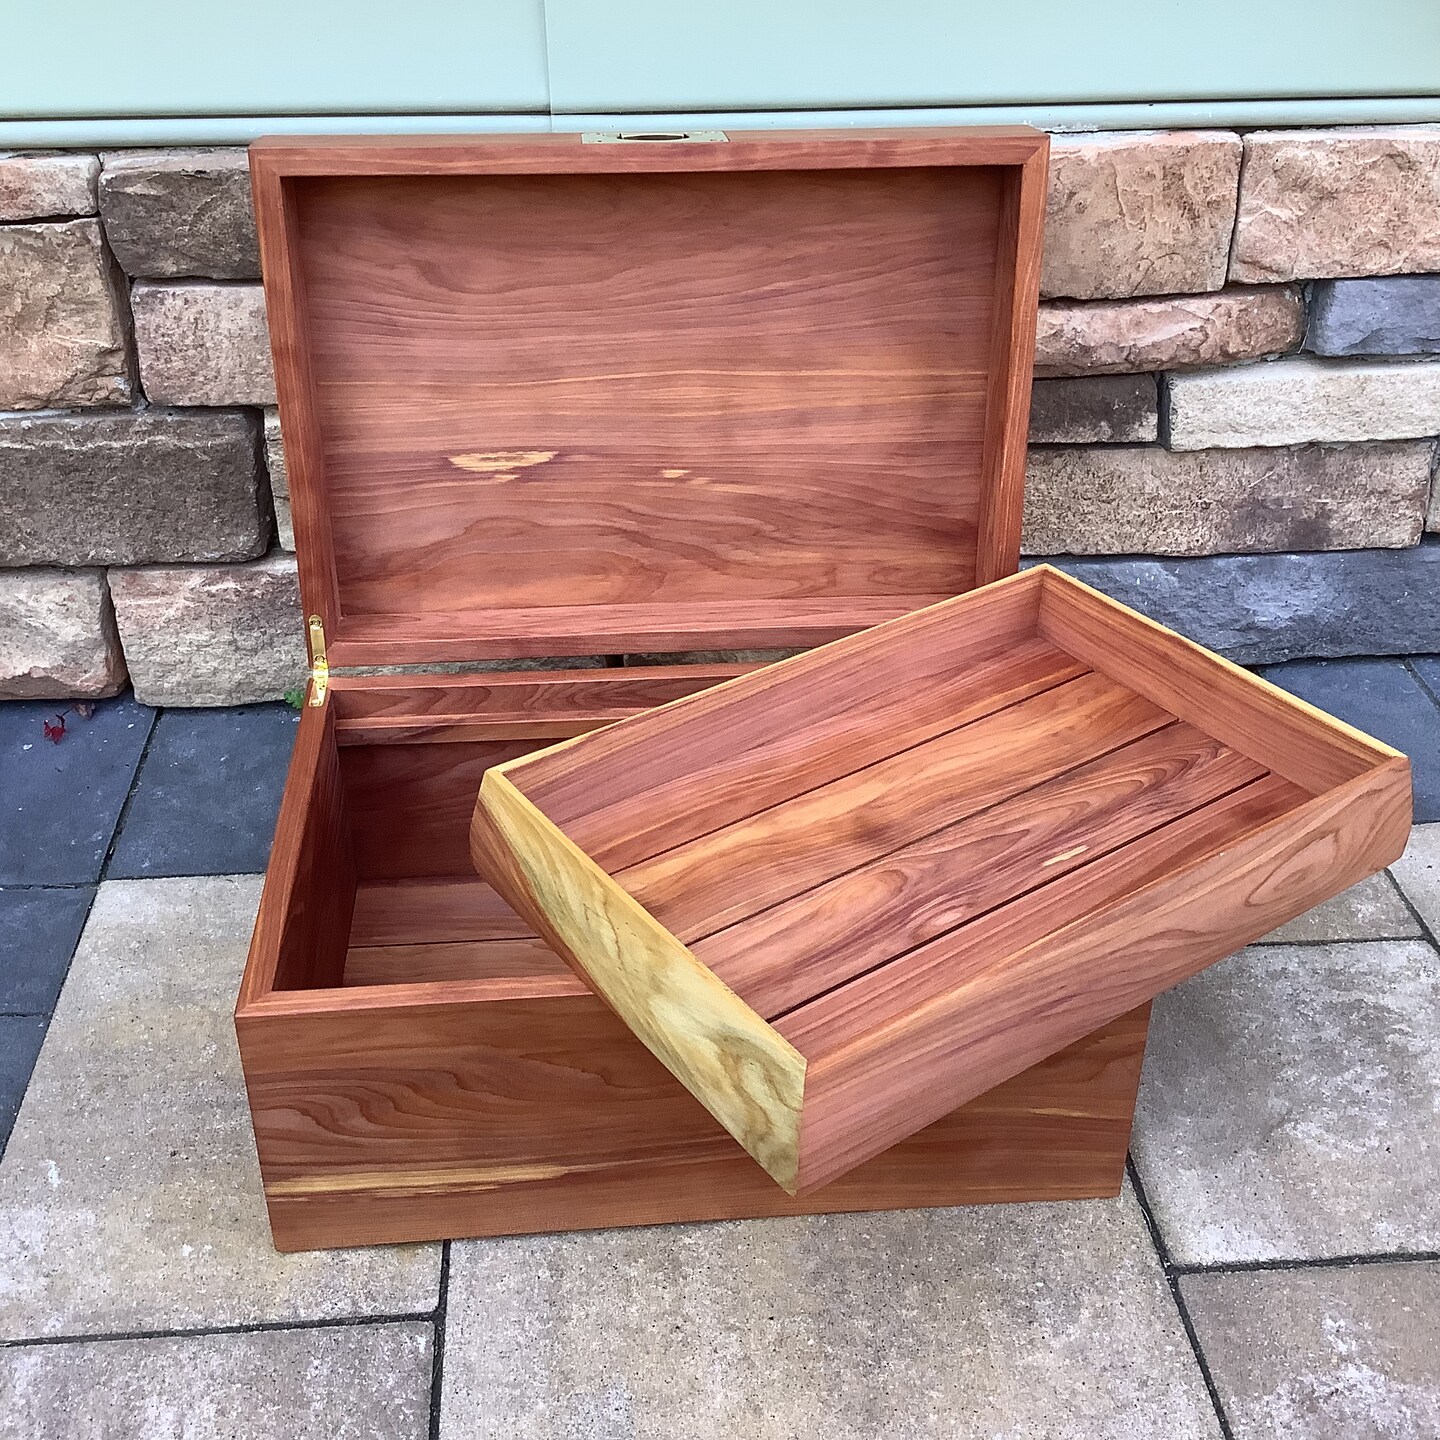 Cedar Wood Box Keepsake Box Wooden Chest -  Canada